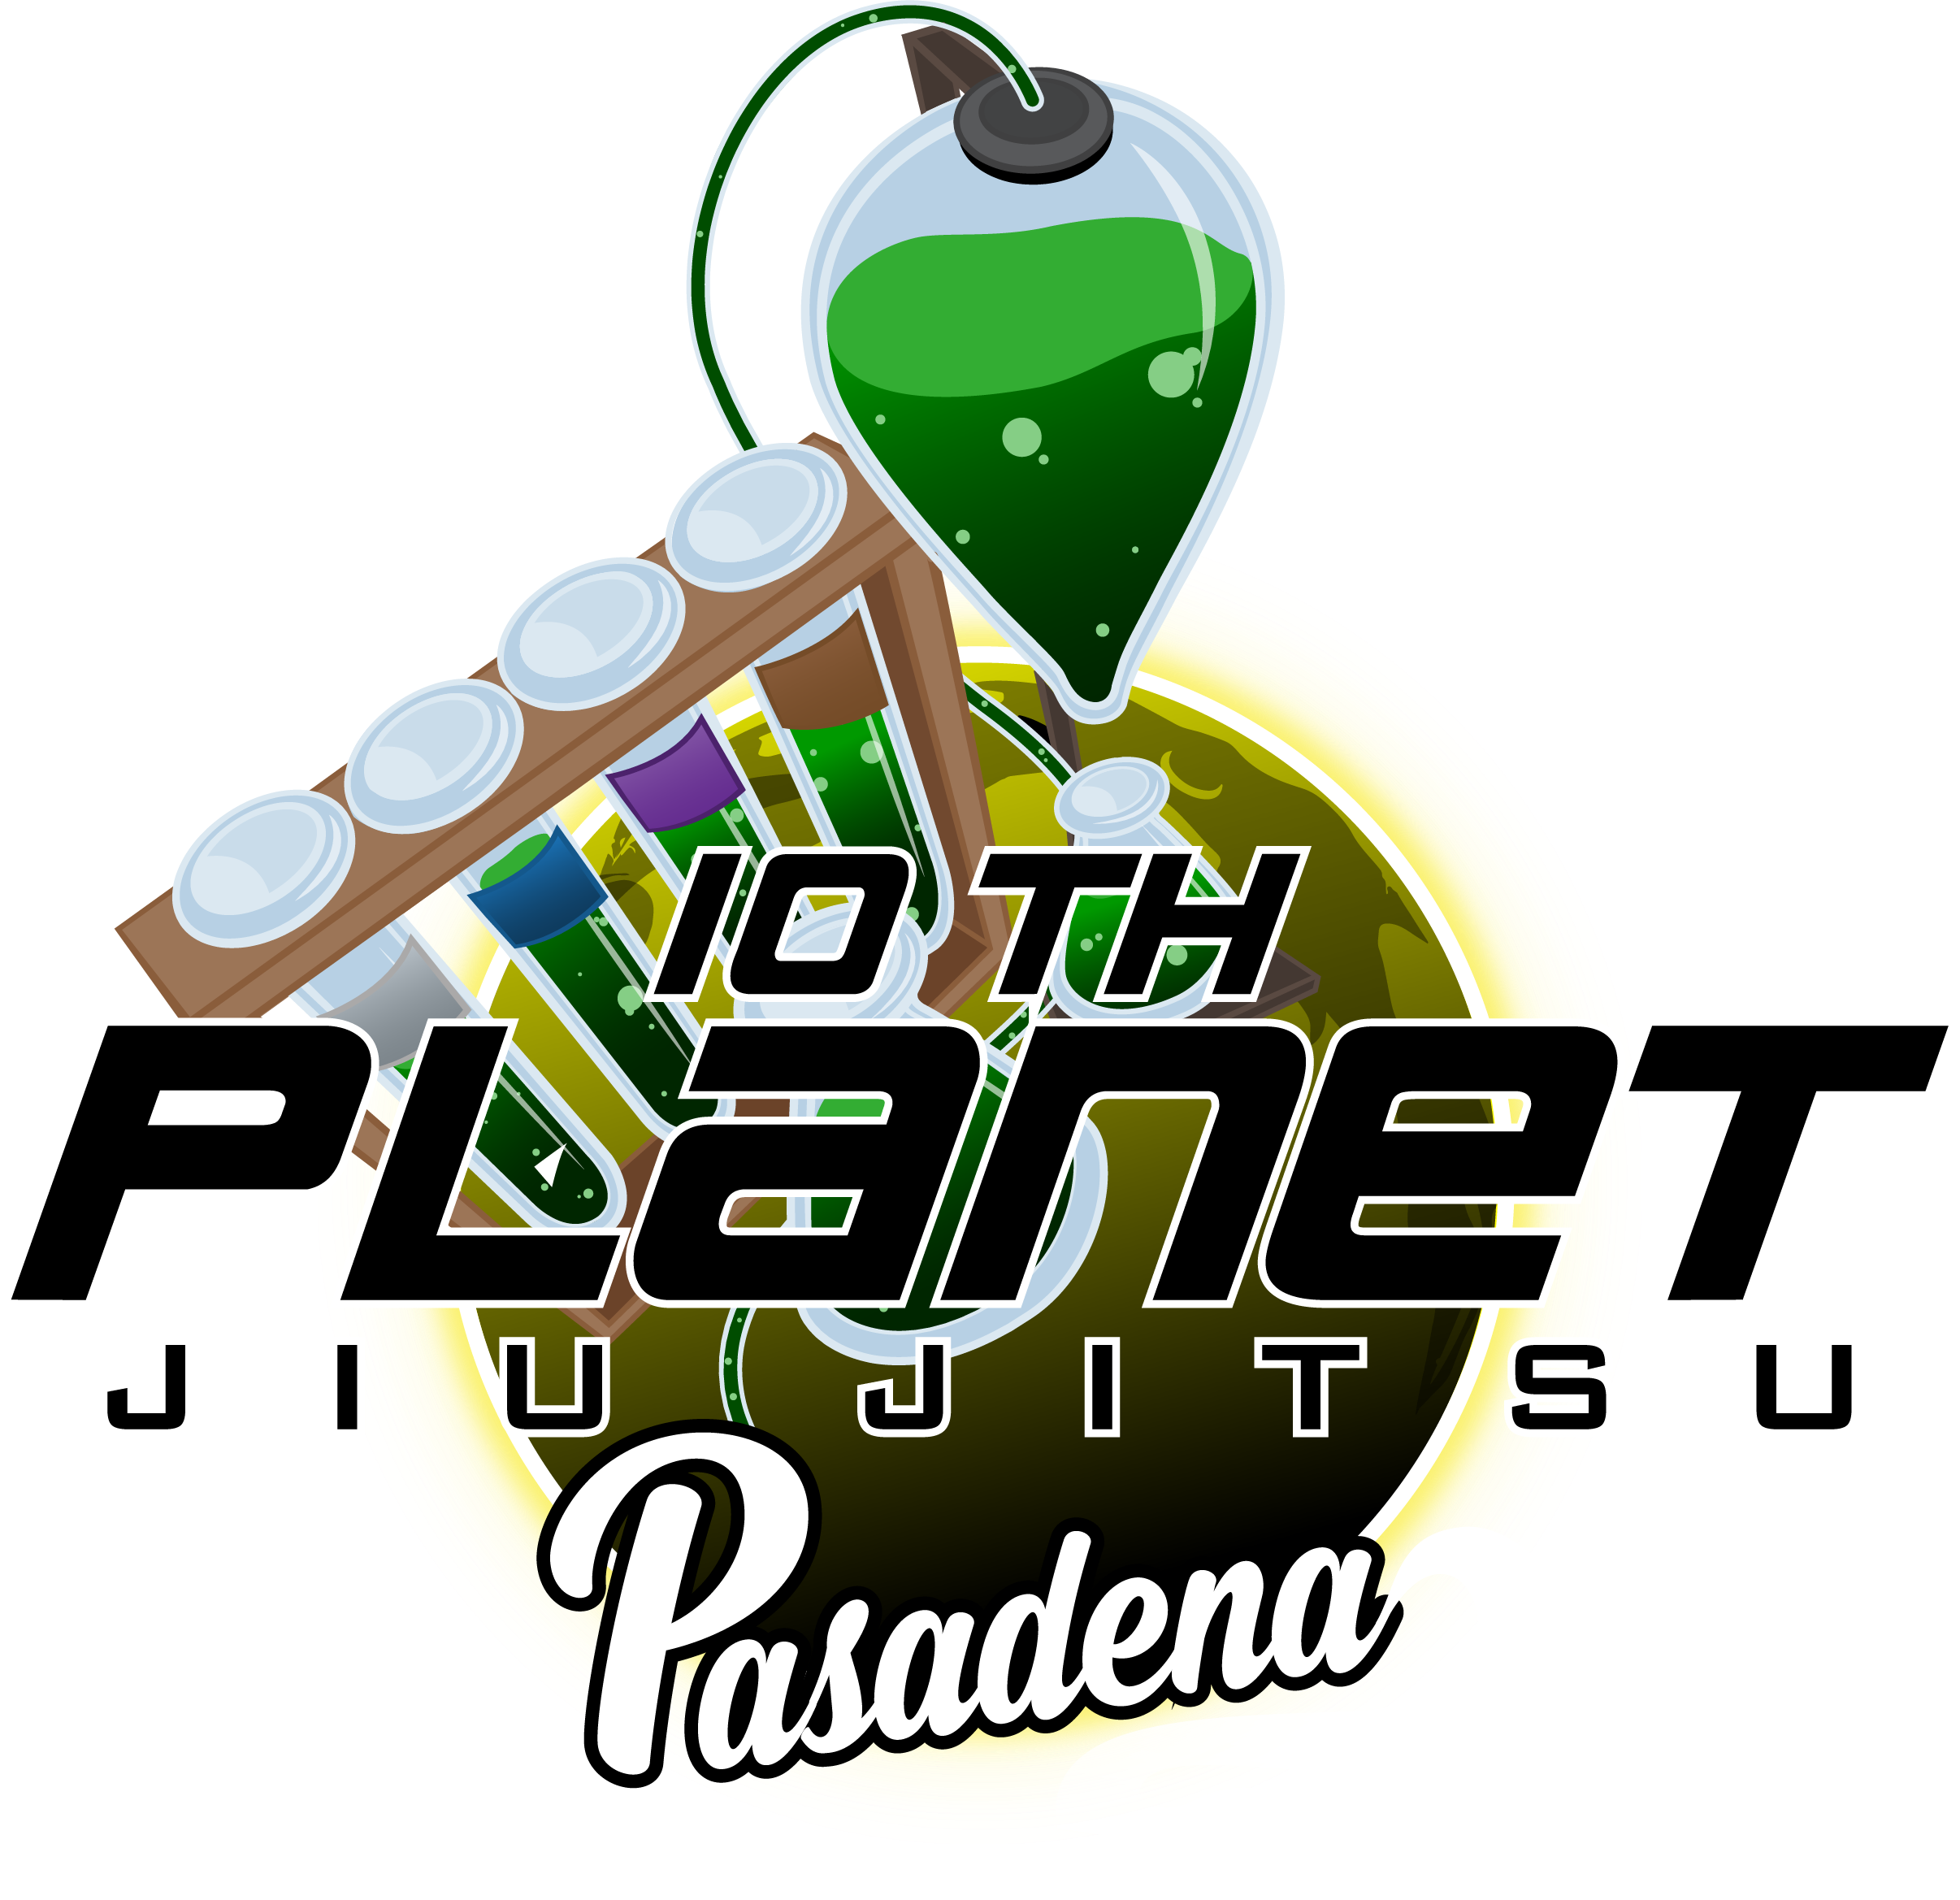 10th Planet Pasadena Logo